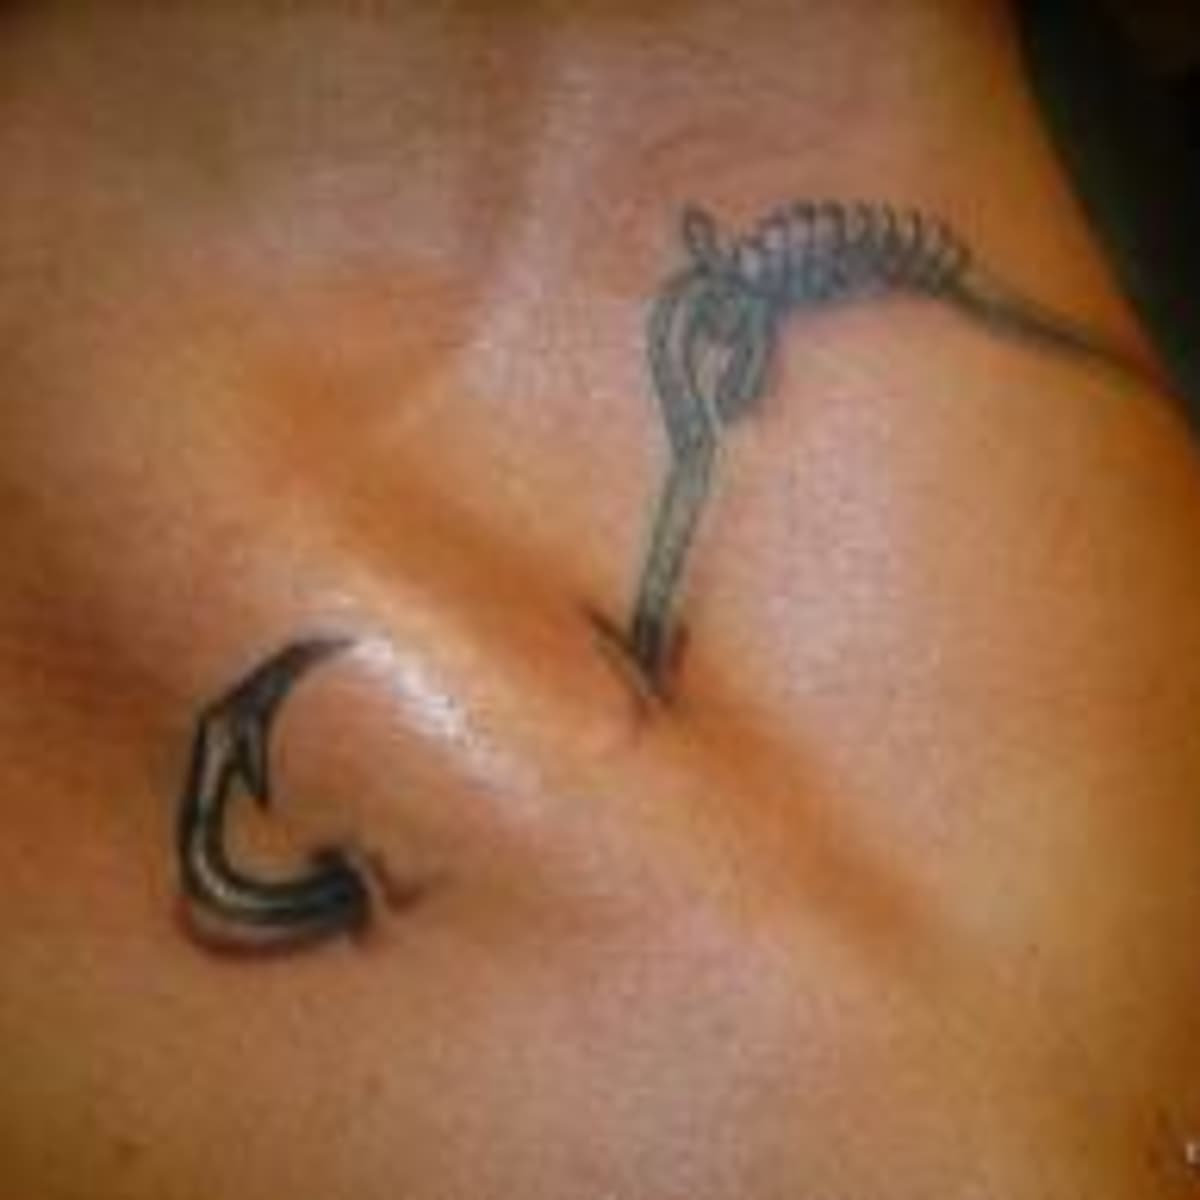 Hook Tattoos And Designs-Hook Tattoo Meanings-Hawaiian Hook